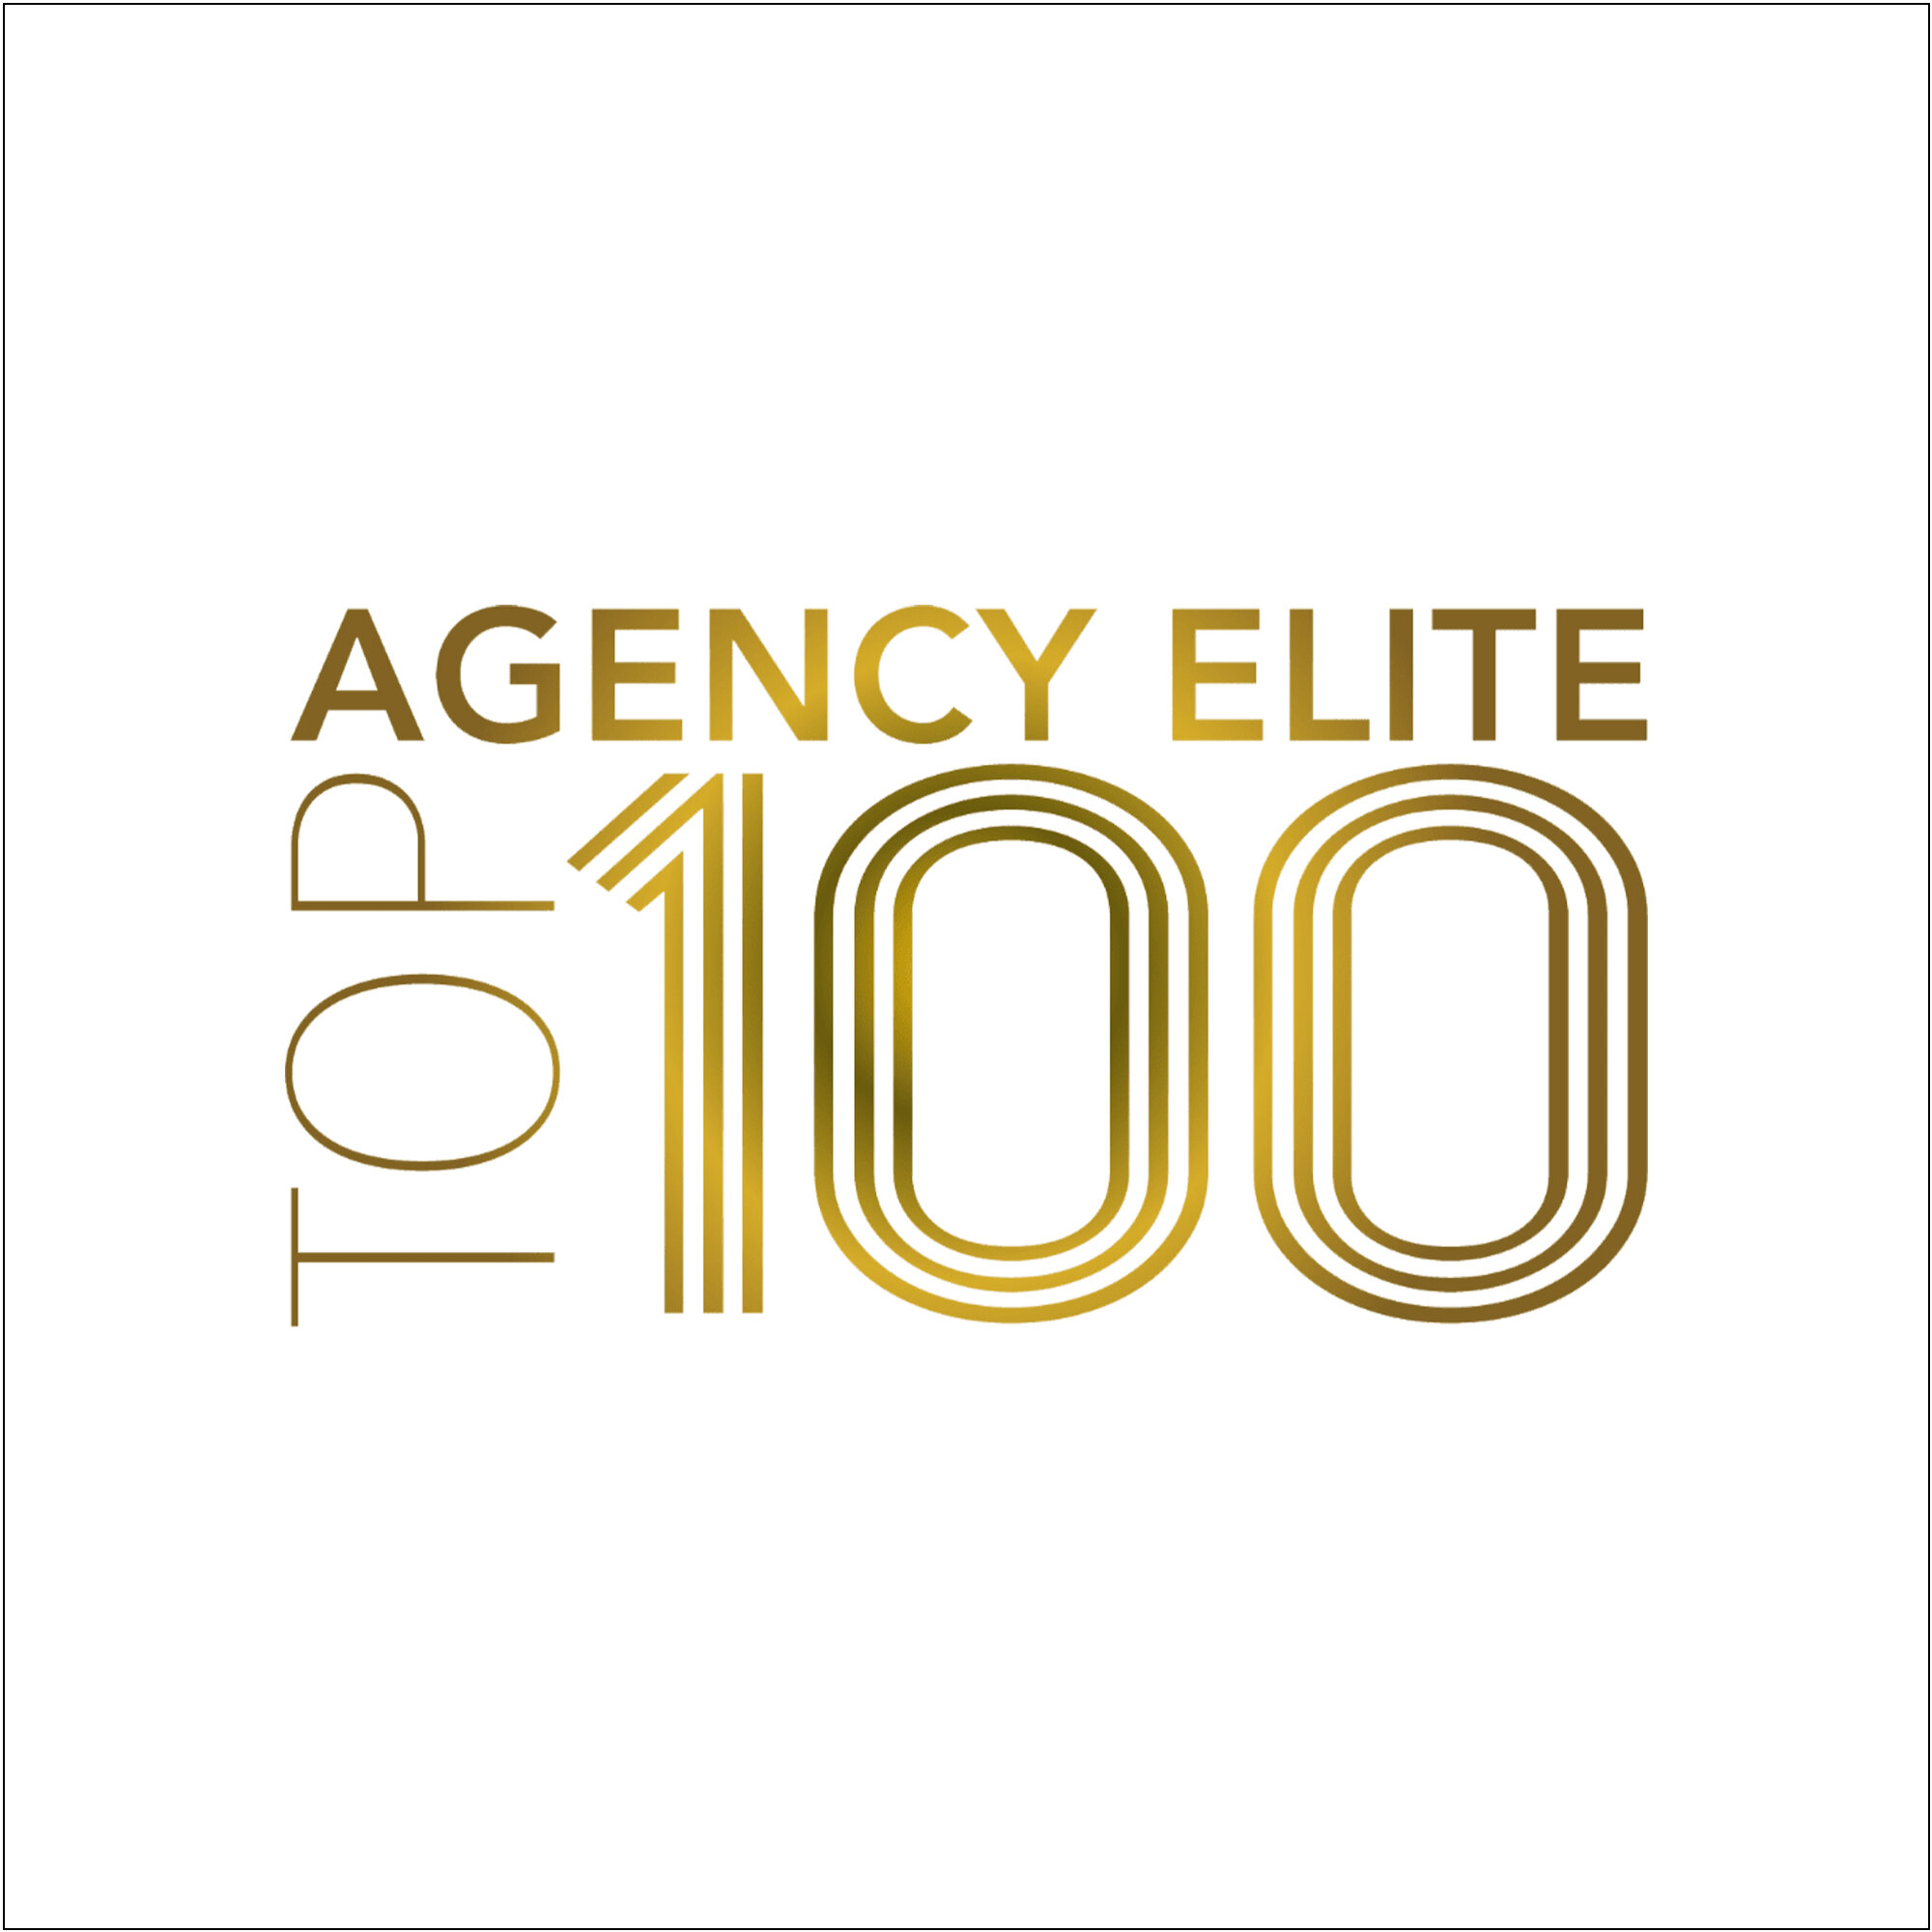 CIIC Wins Big With PRNews’ Agency Elite Top 100 Award